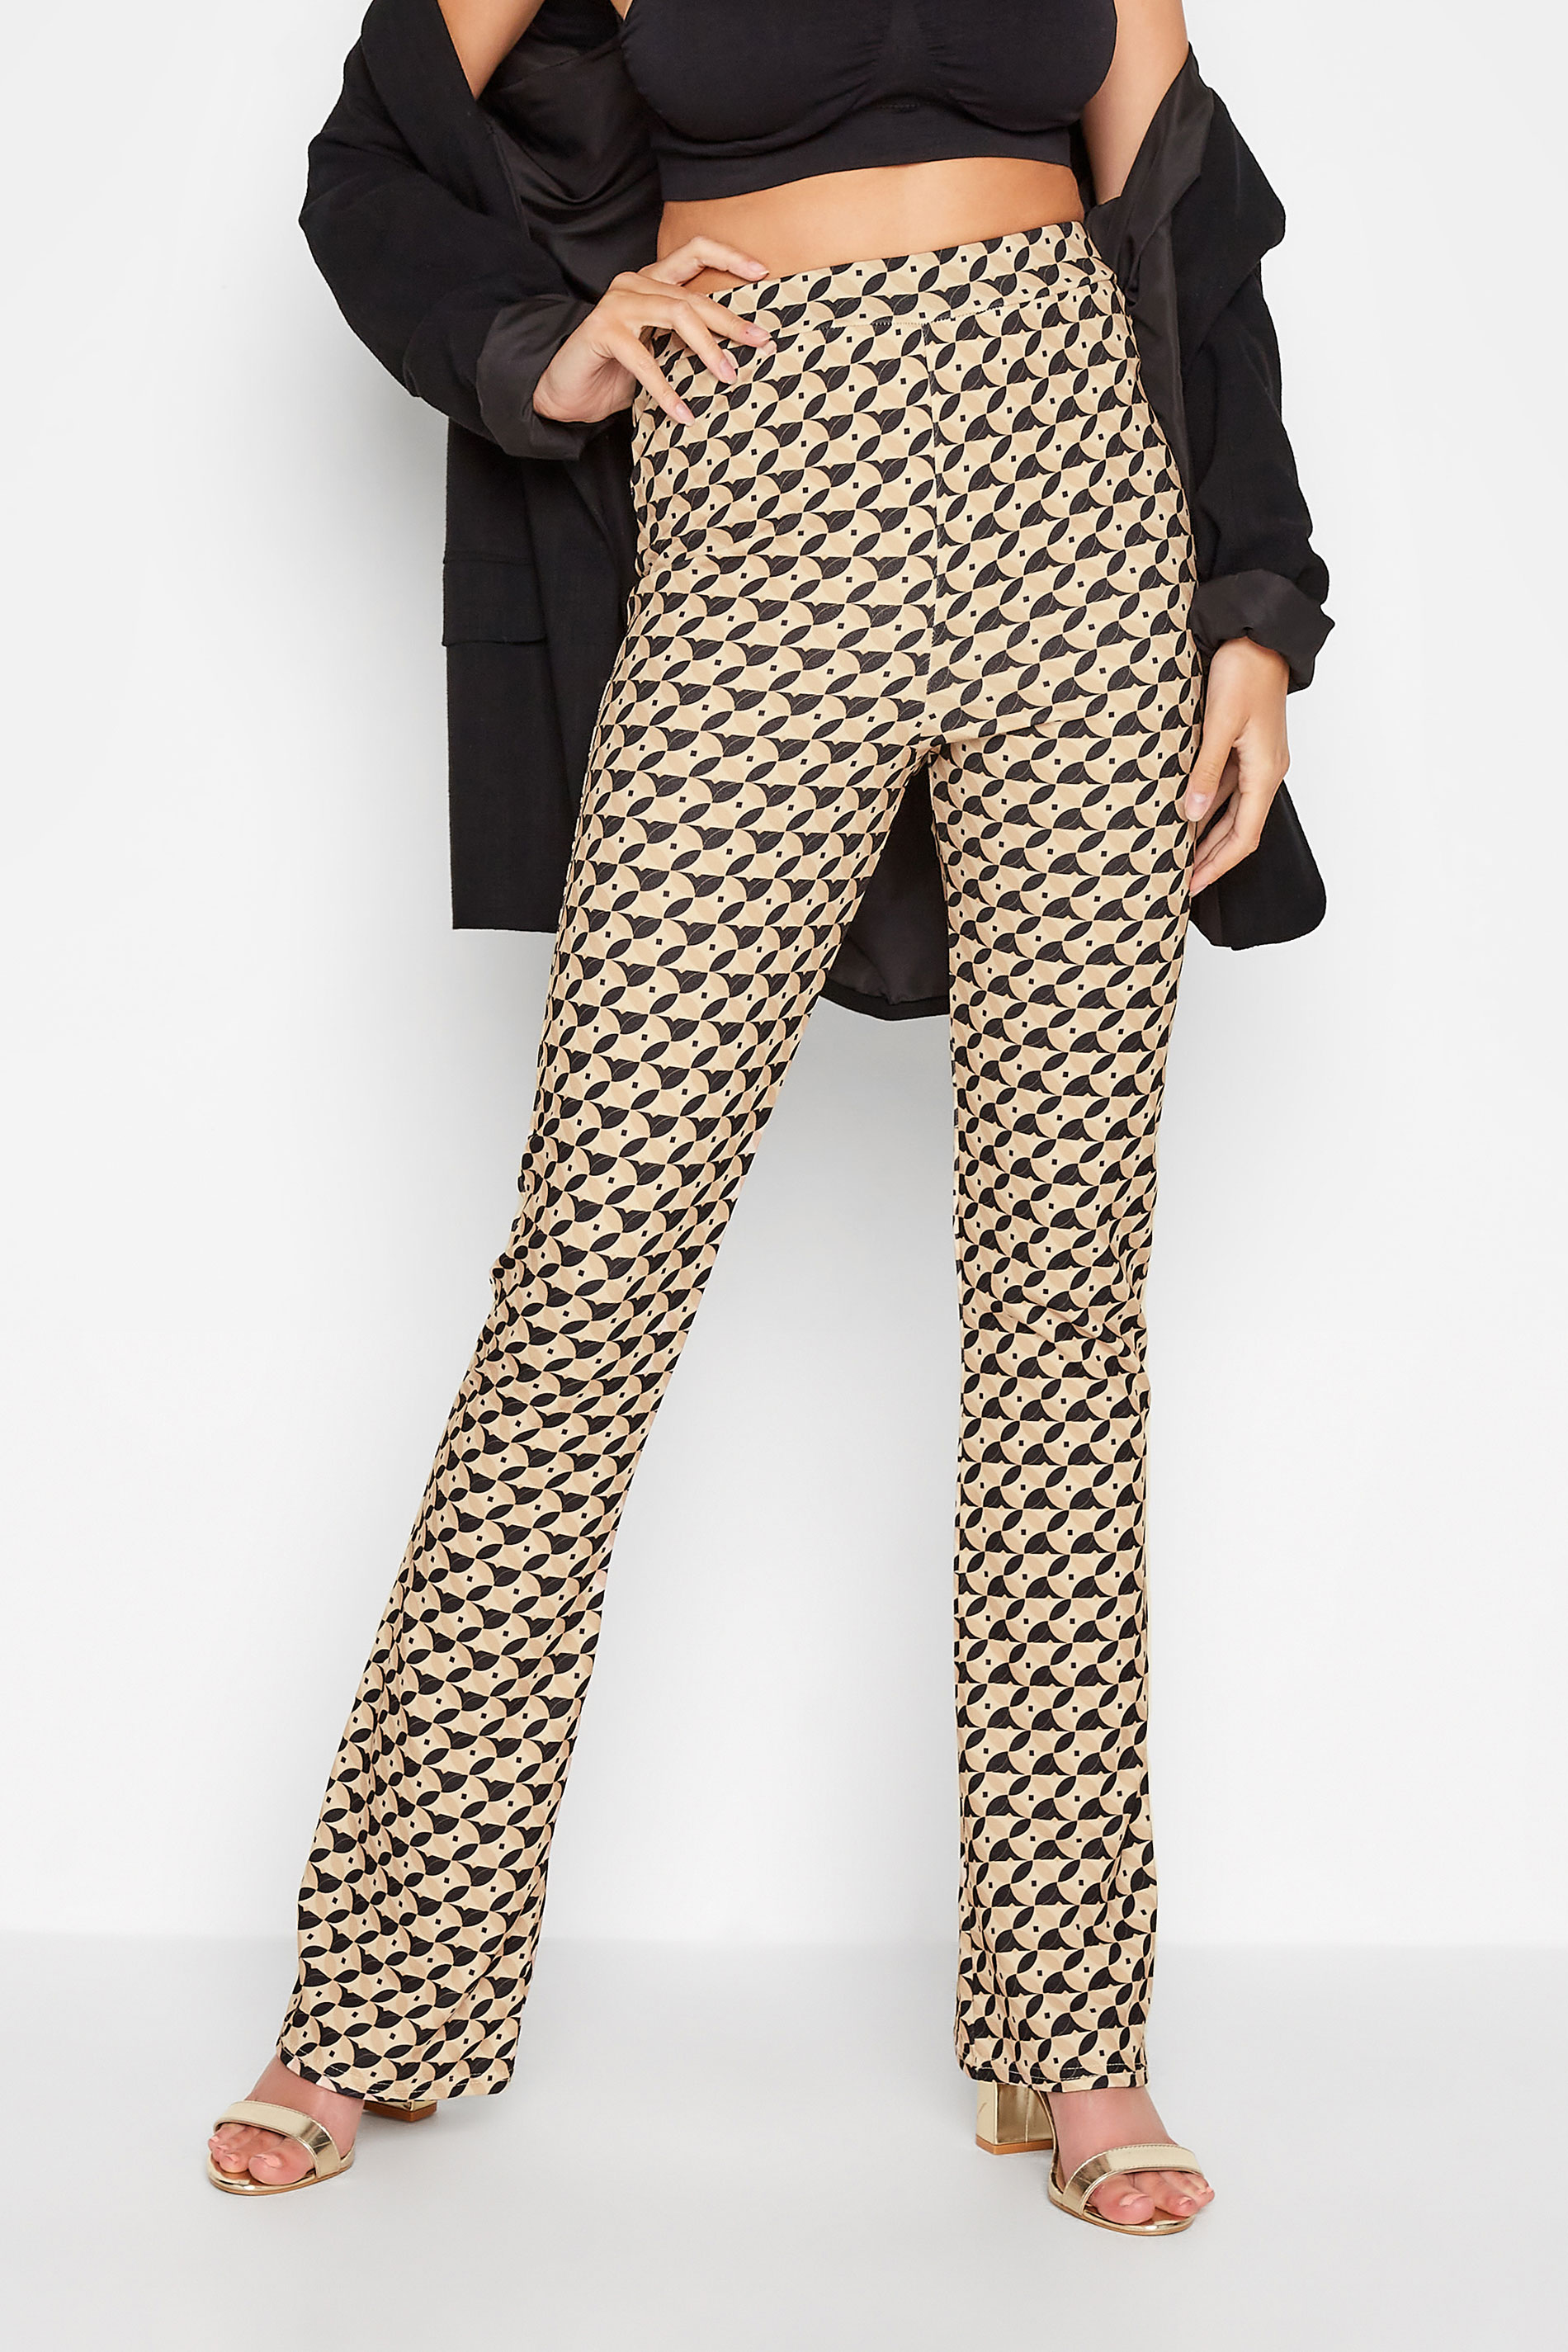 LTS Tall Women's Beige Brown Geometric Print Scuba Trousers | Long Tall Sally 1